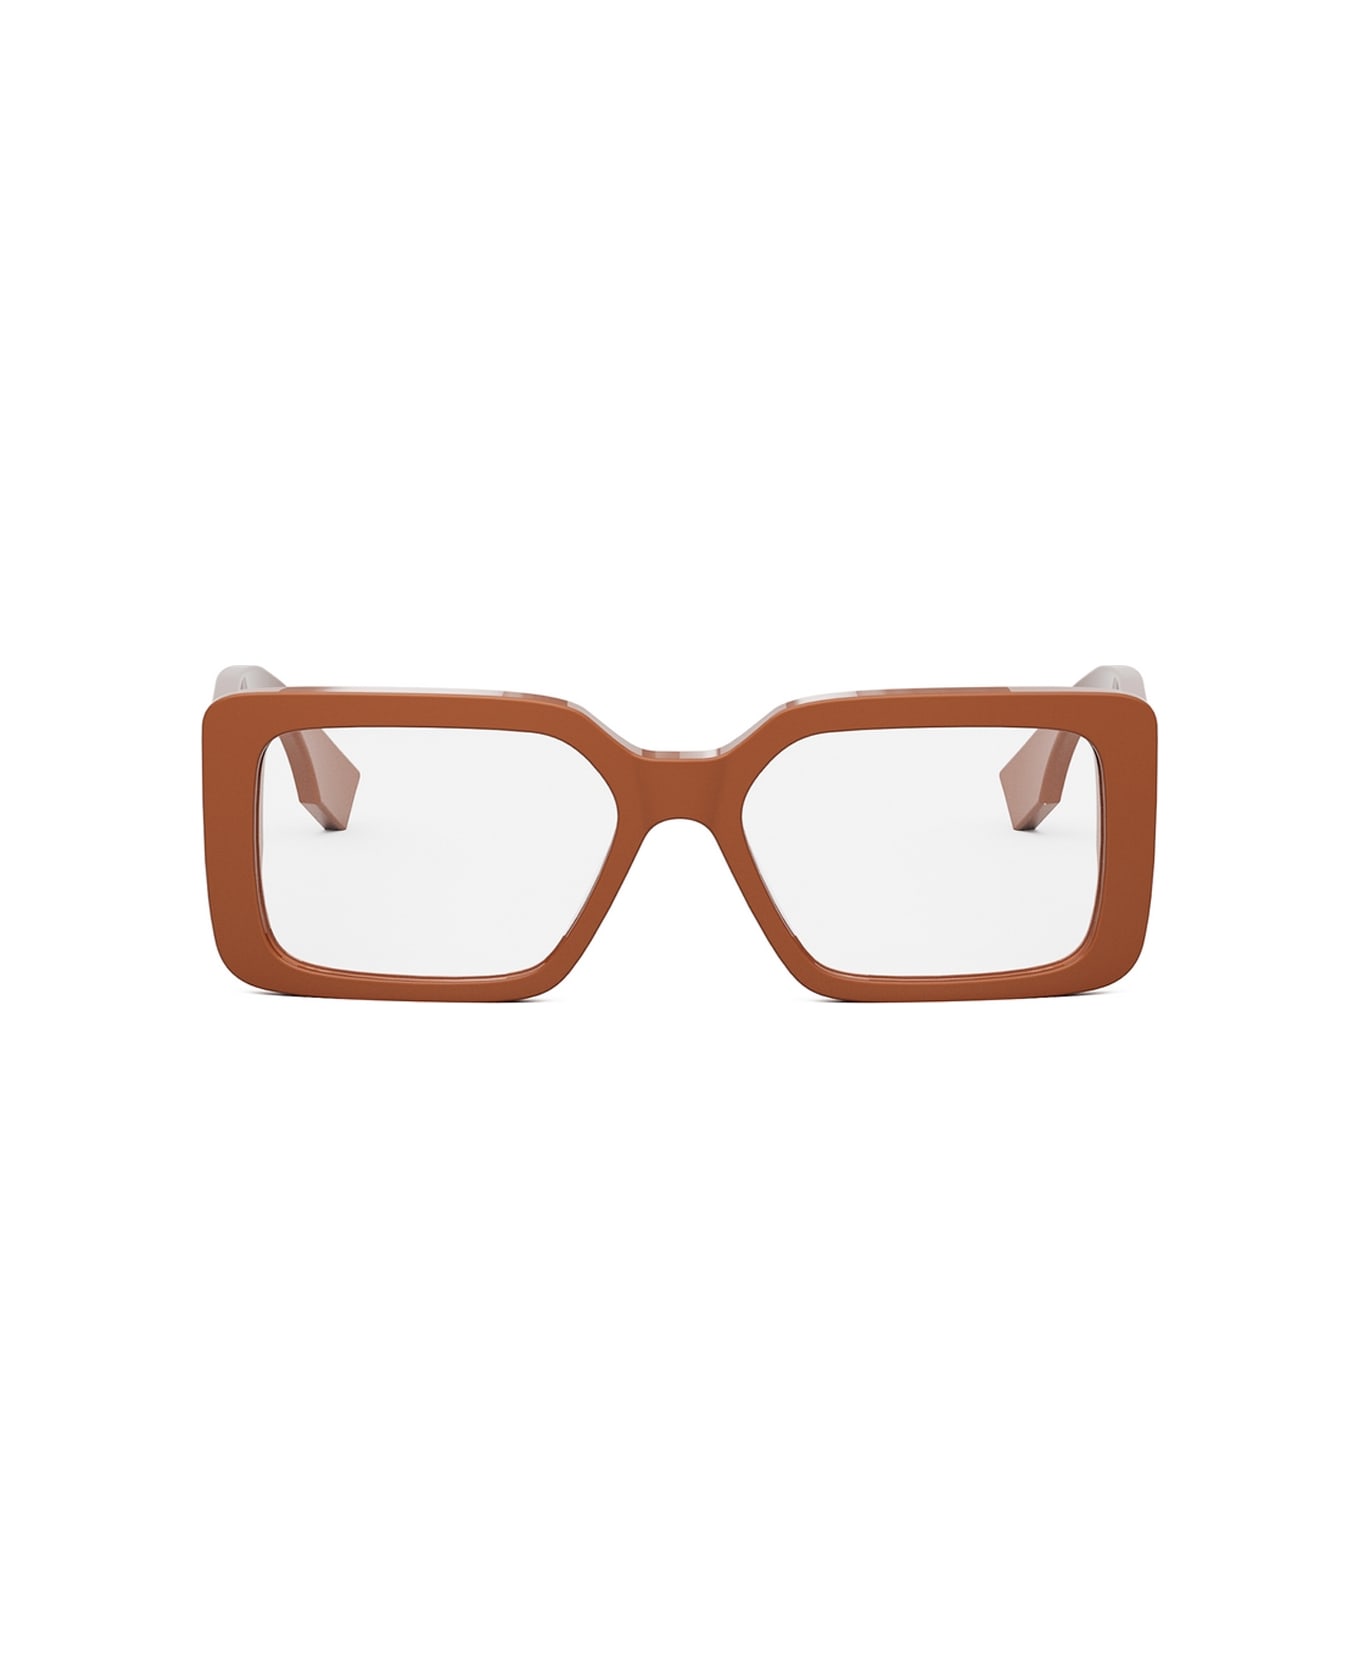 Fendi Eyewear Fe50072i 050 Glasses - Arancione